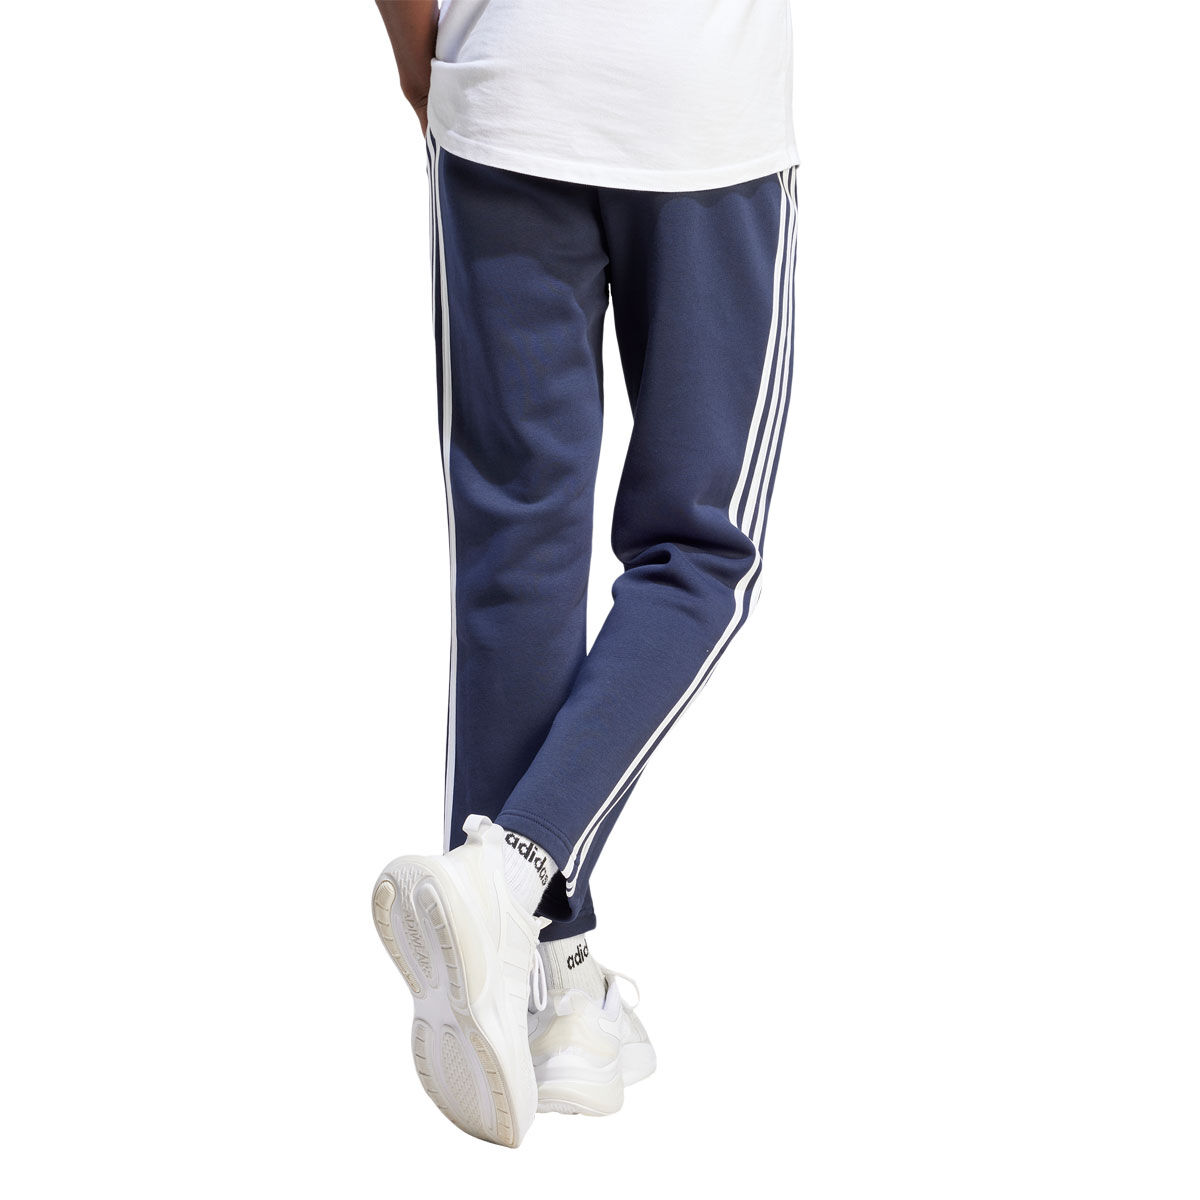 Adidas Men's Essentials Fleece Open Hem 3-Stripes, Regular Fit